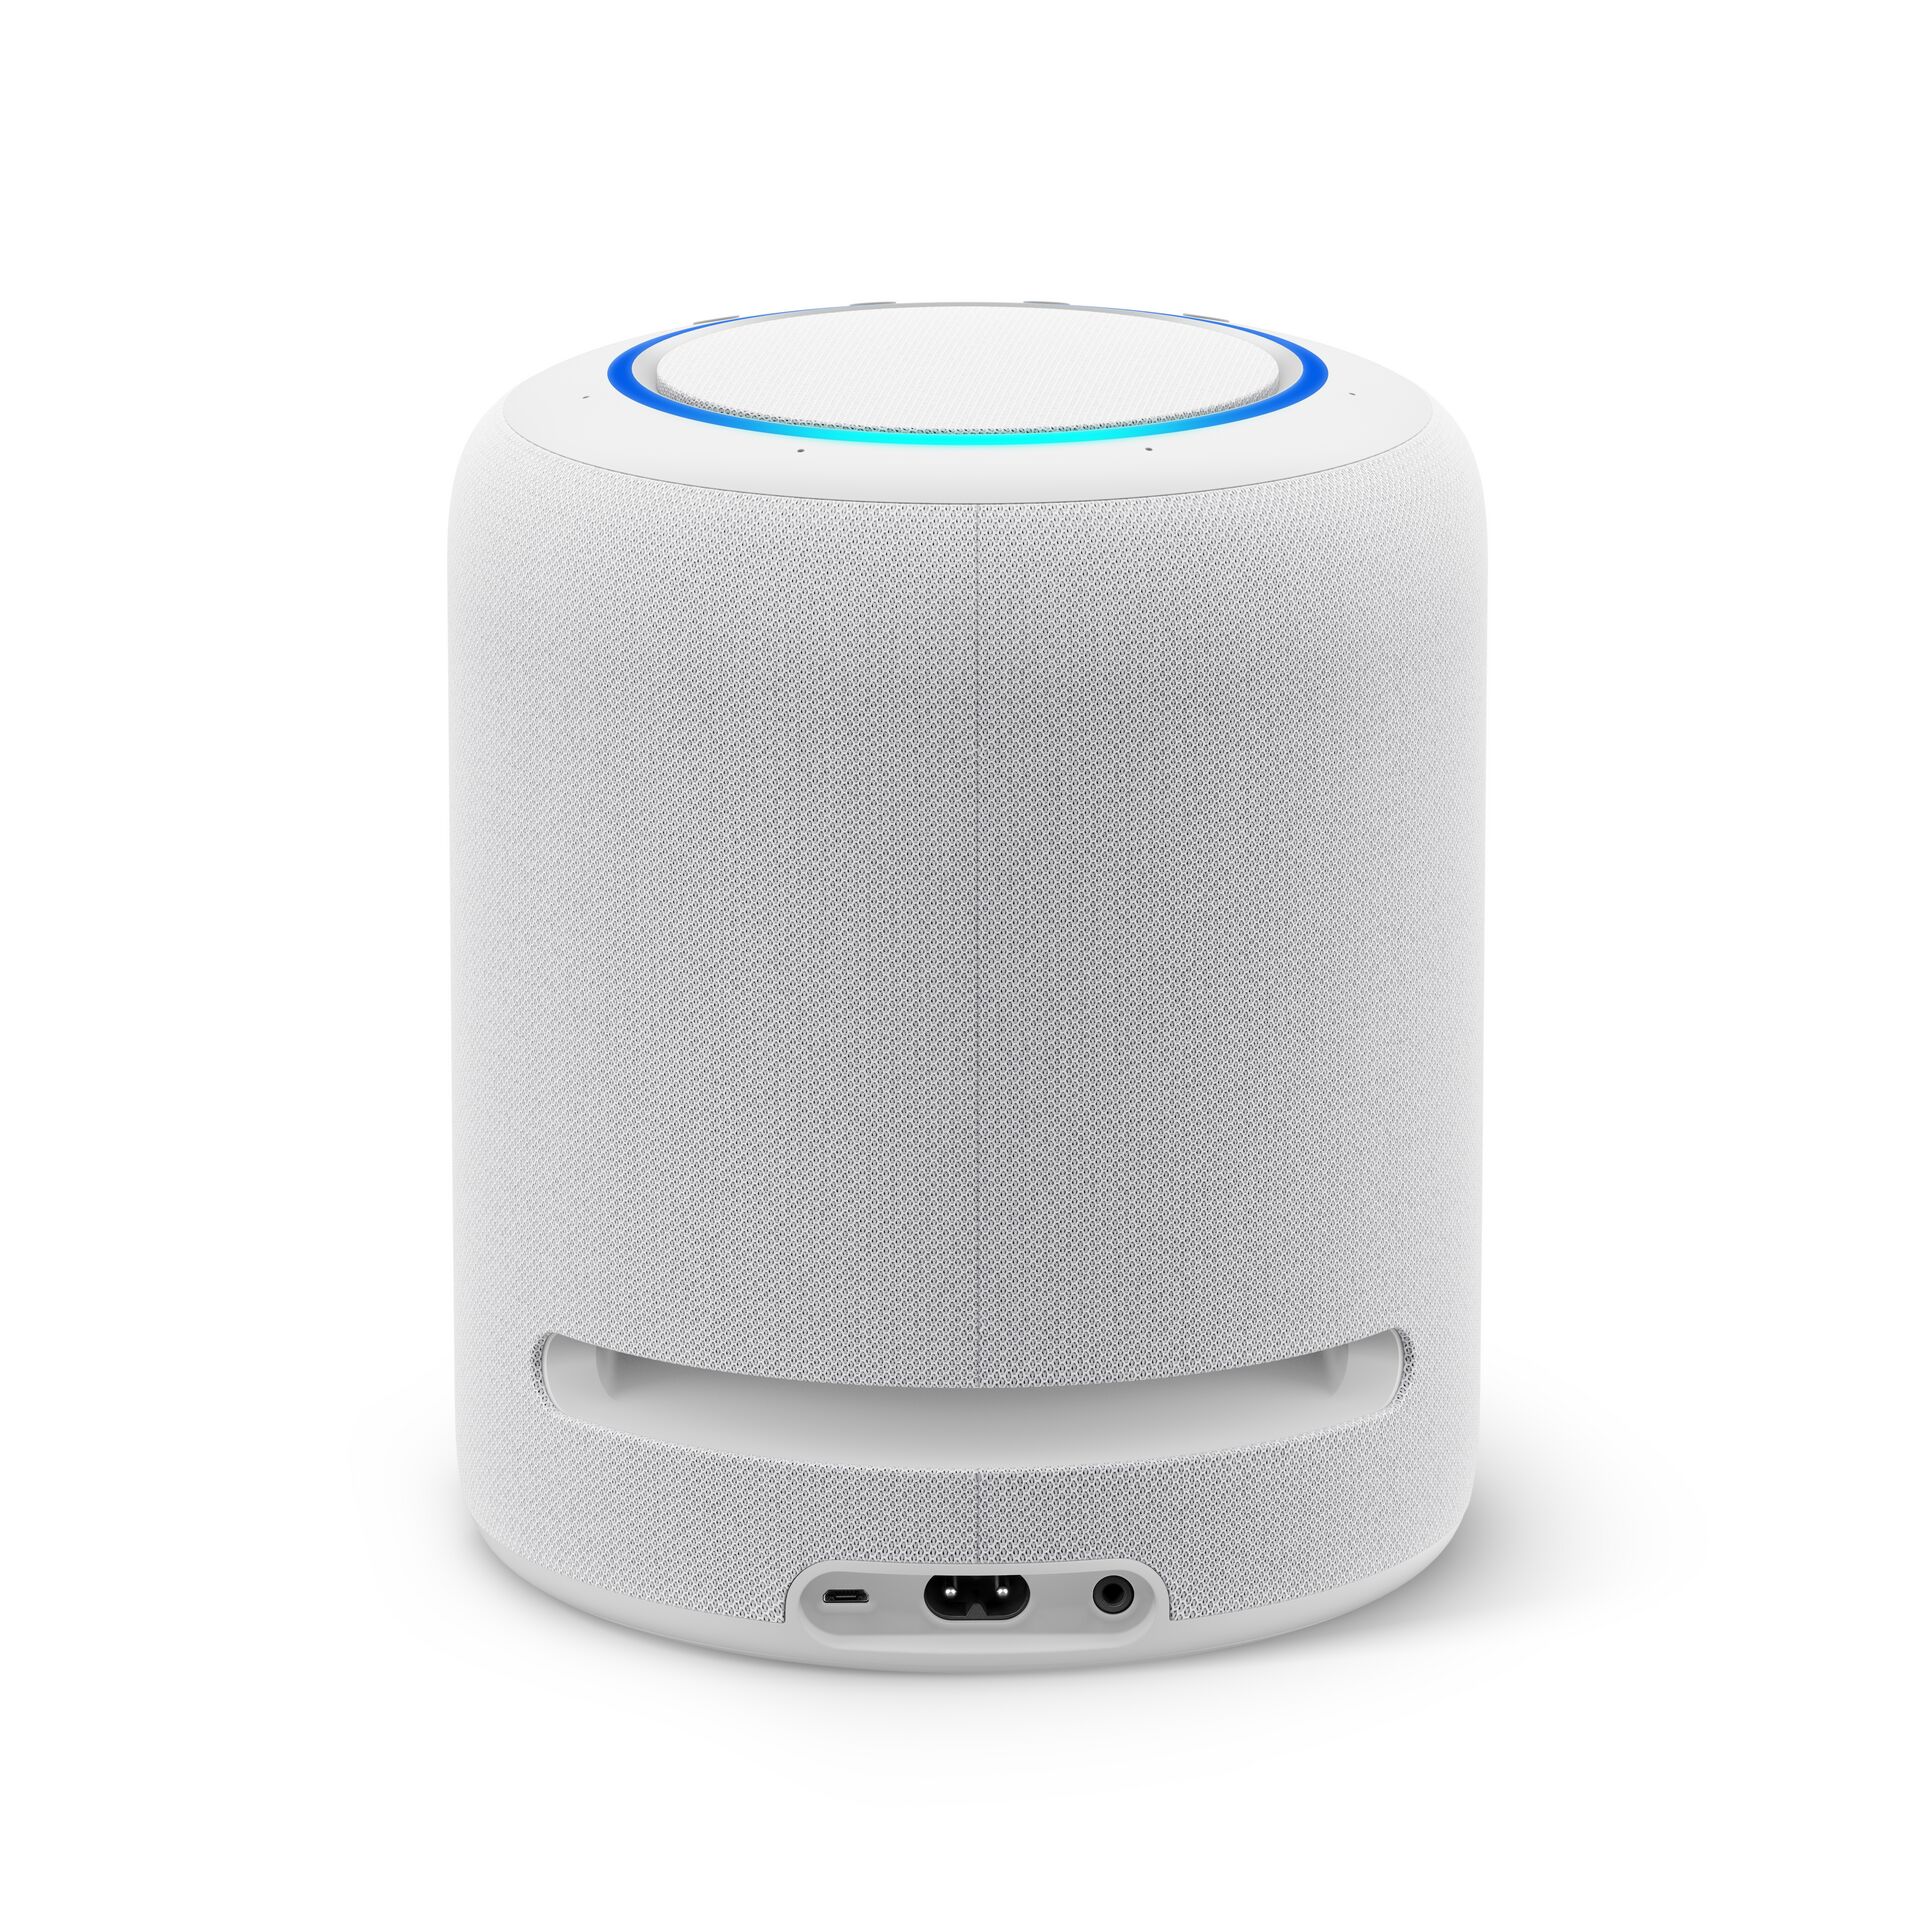 Amazon Echo Studio Our Best-Sounding smart Speaker Ever - With